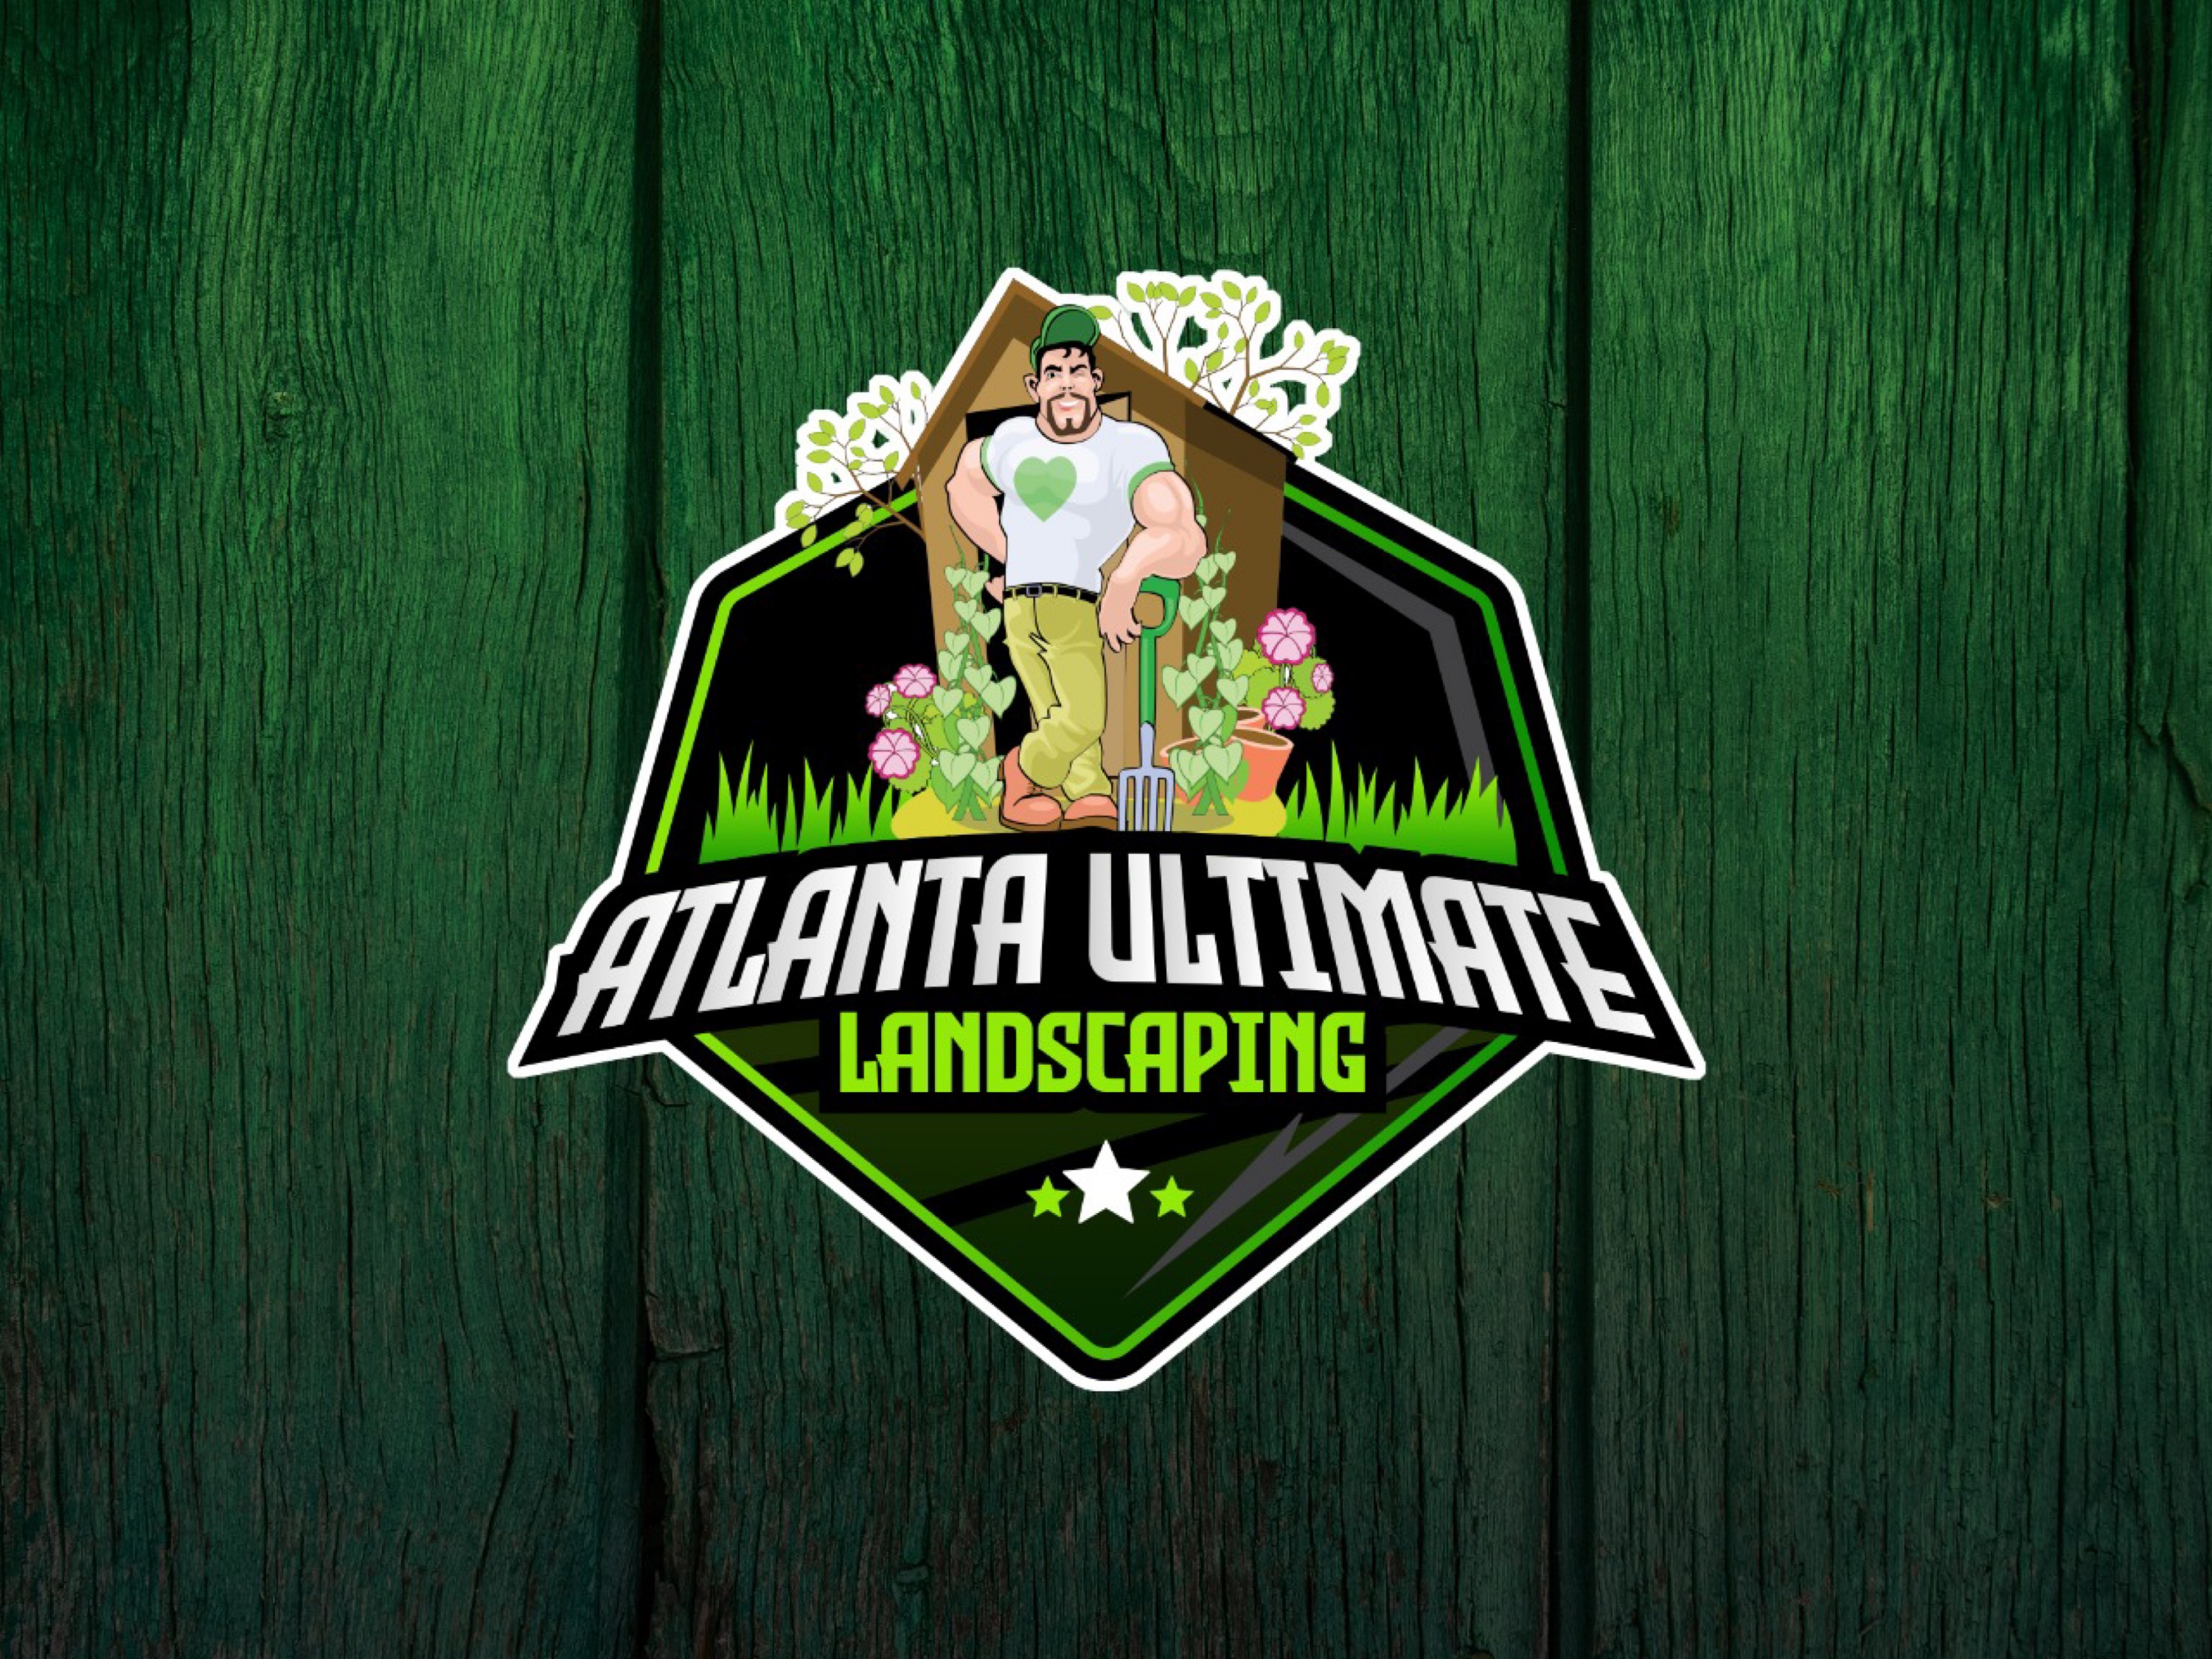 Atlanta Ultimate Landscaping Logo